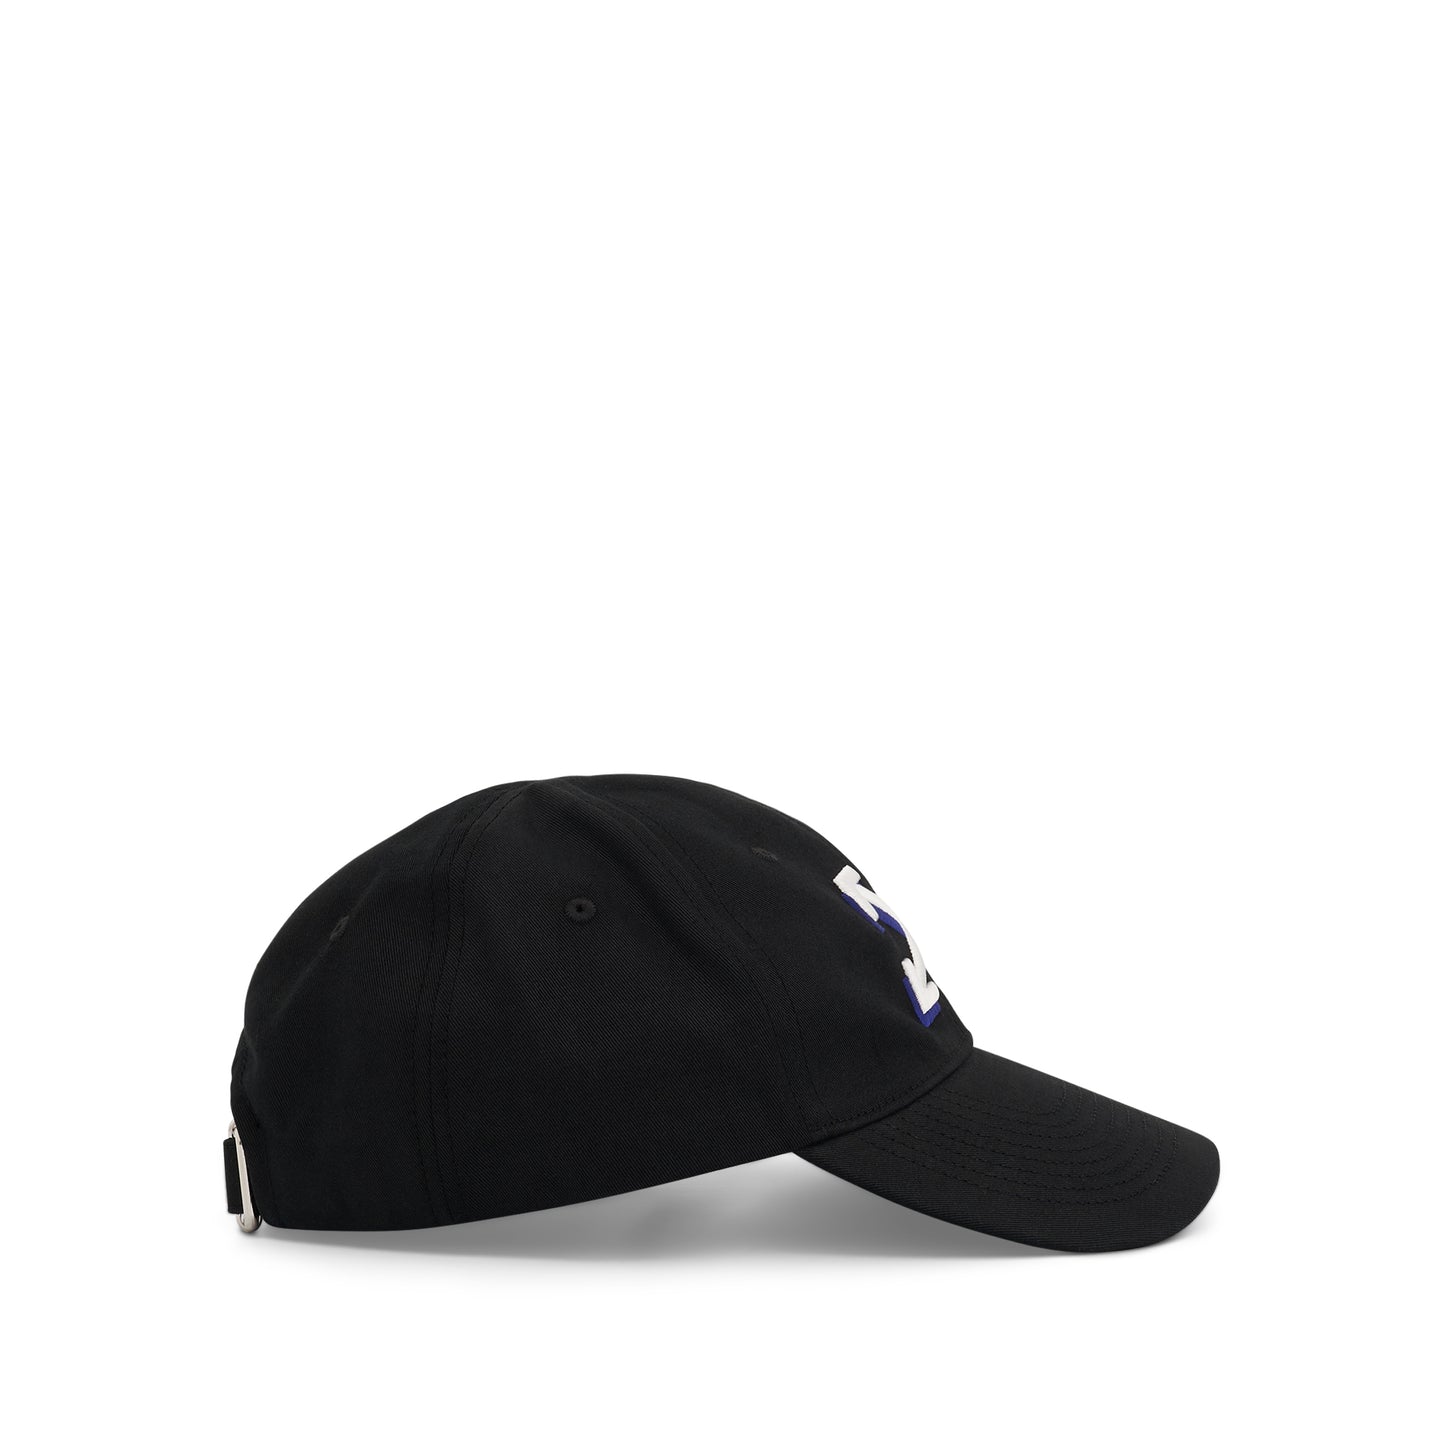 Arrow Baseball Cap in Black/White/Blue